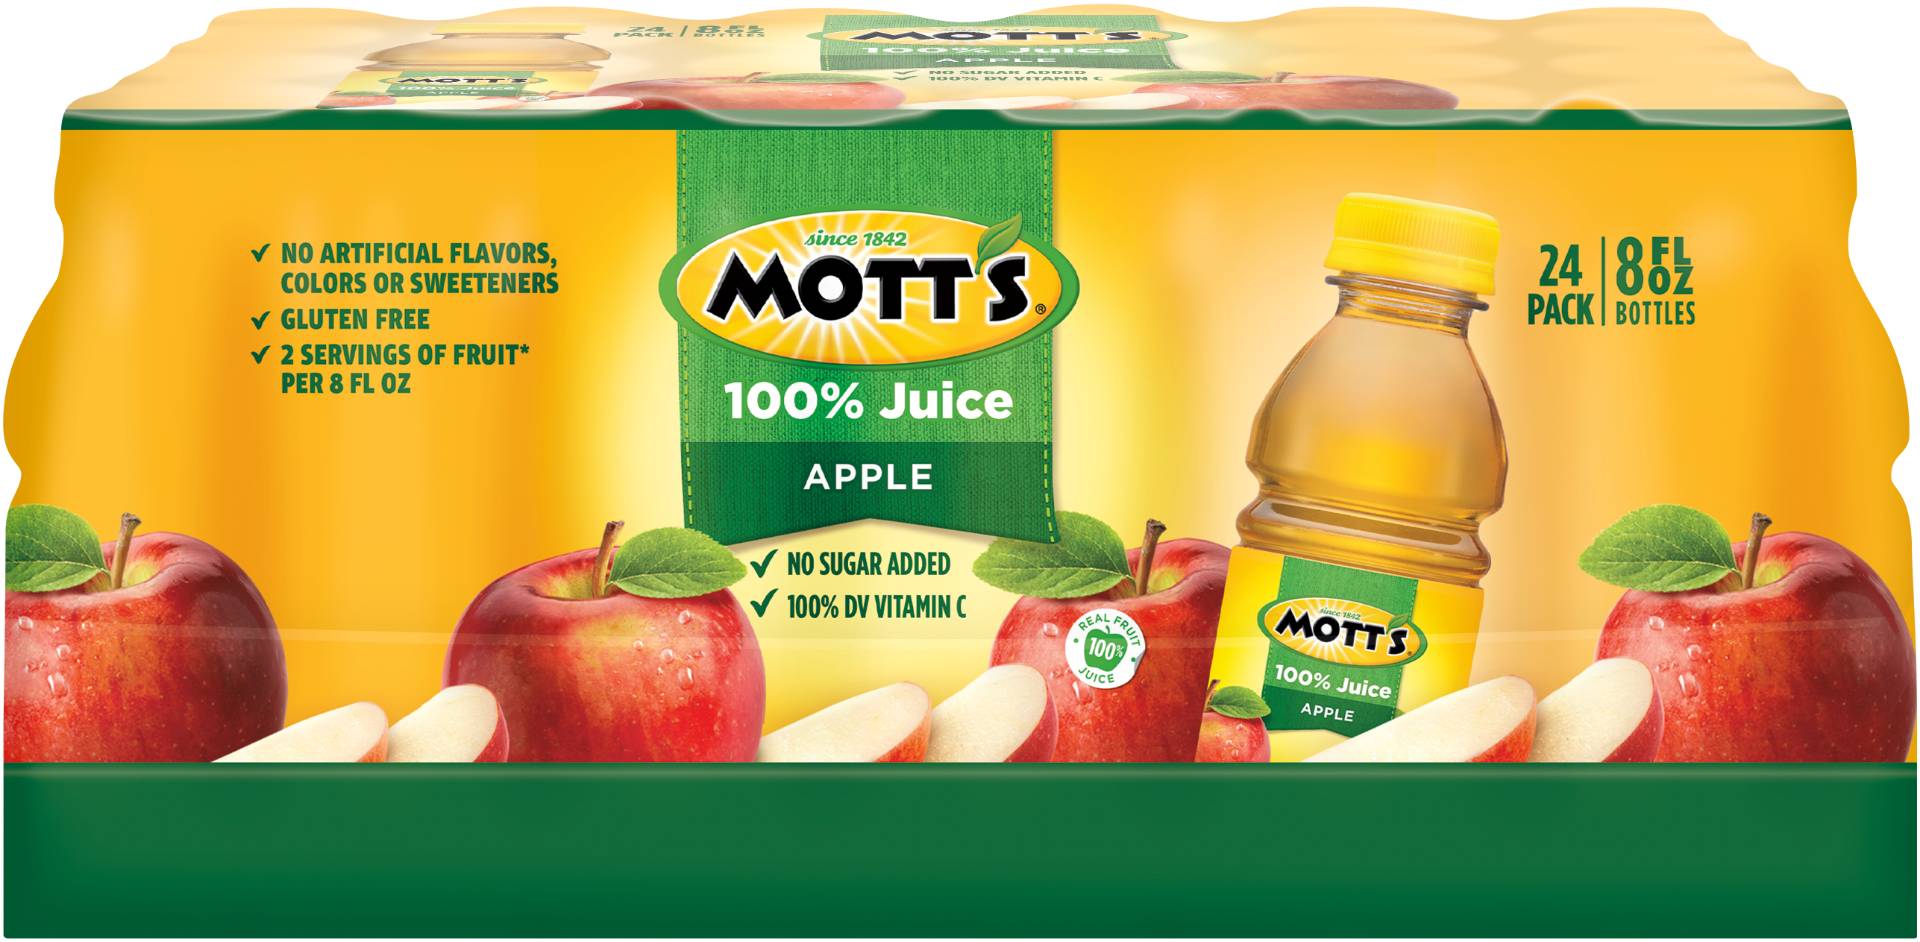 Mott's - Apple Juice -24/8 oz plastic bottles (1X24|1 Unit per Case)